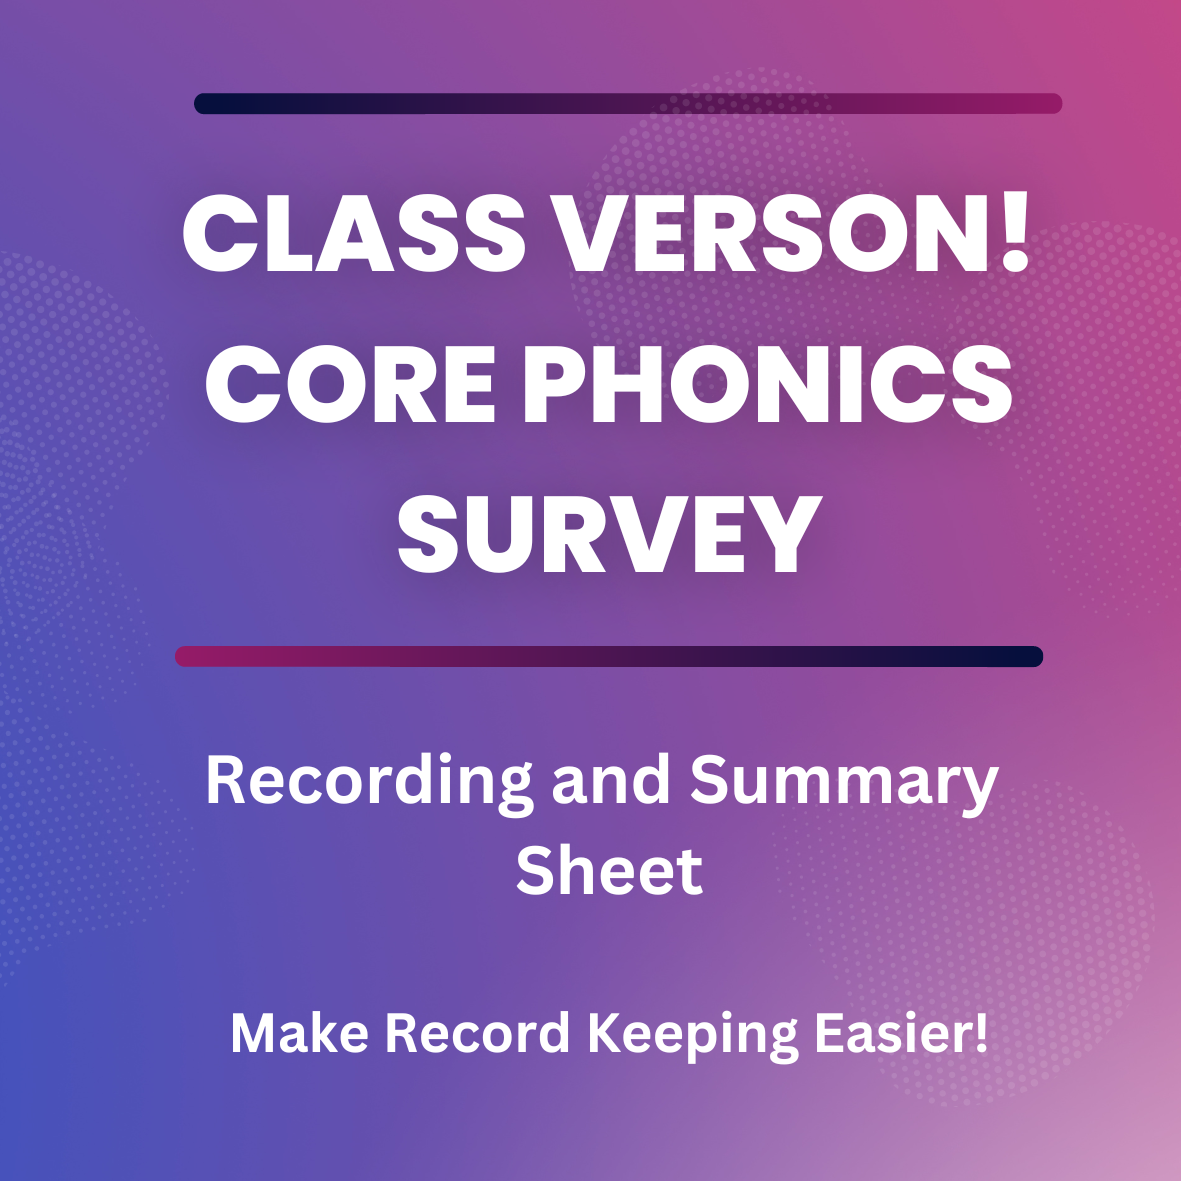 Class Version - Core Phonics Survey Recording and Summary Sheet